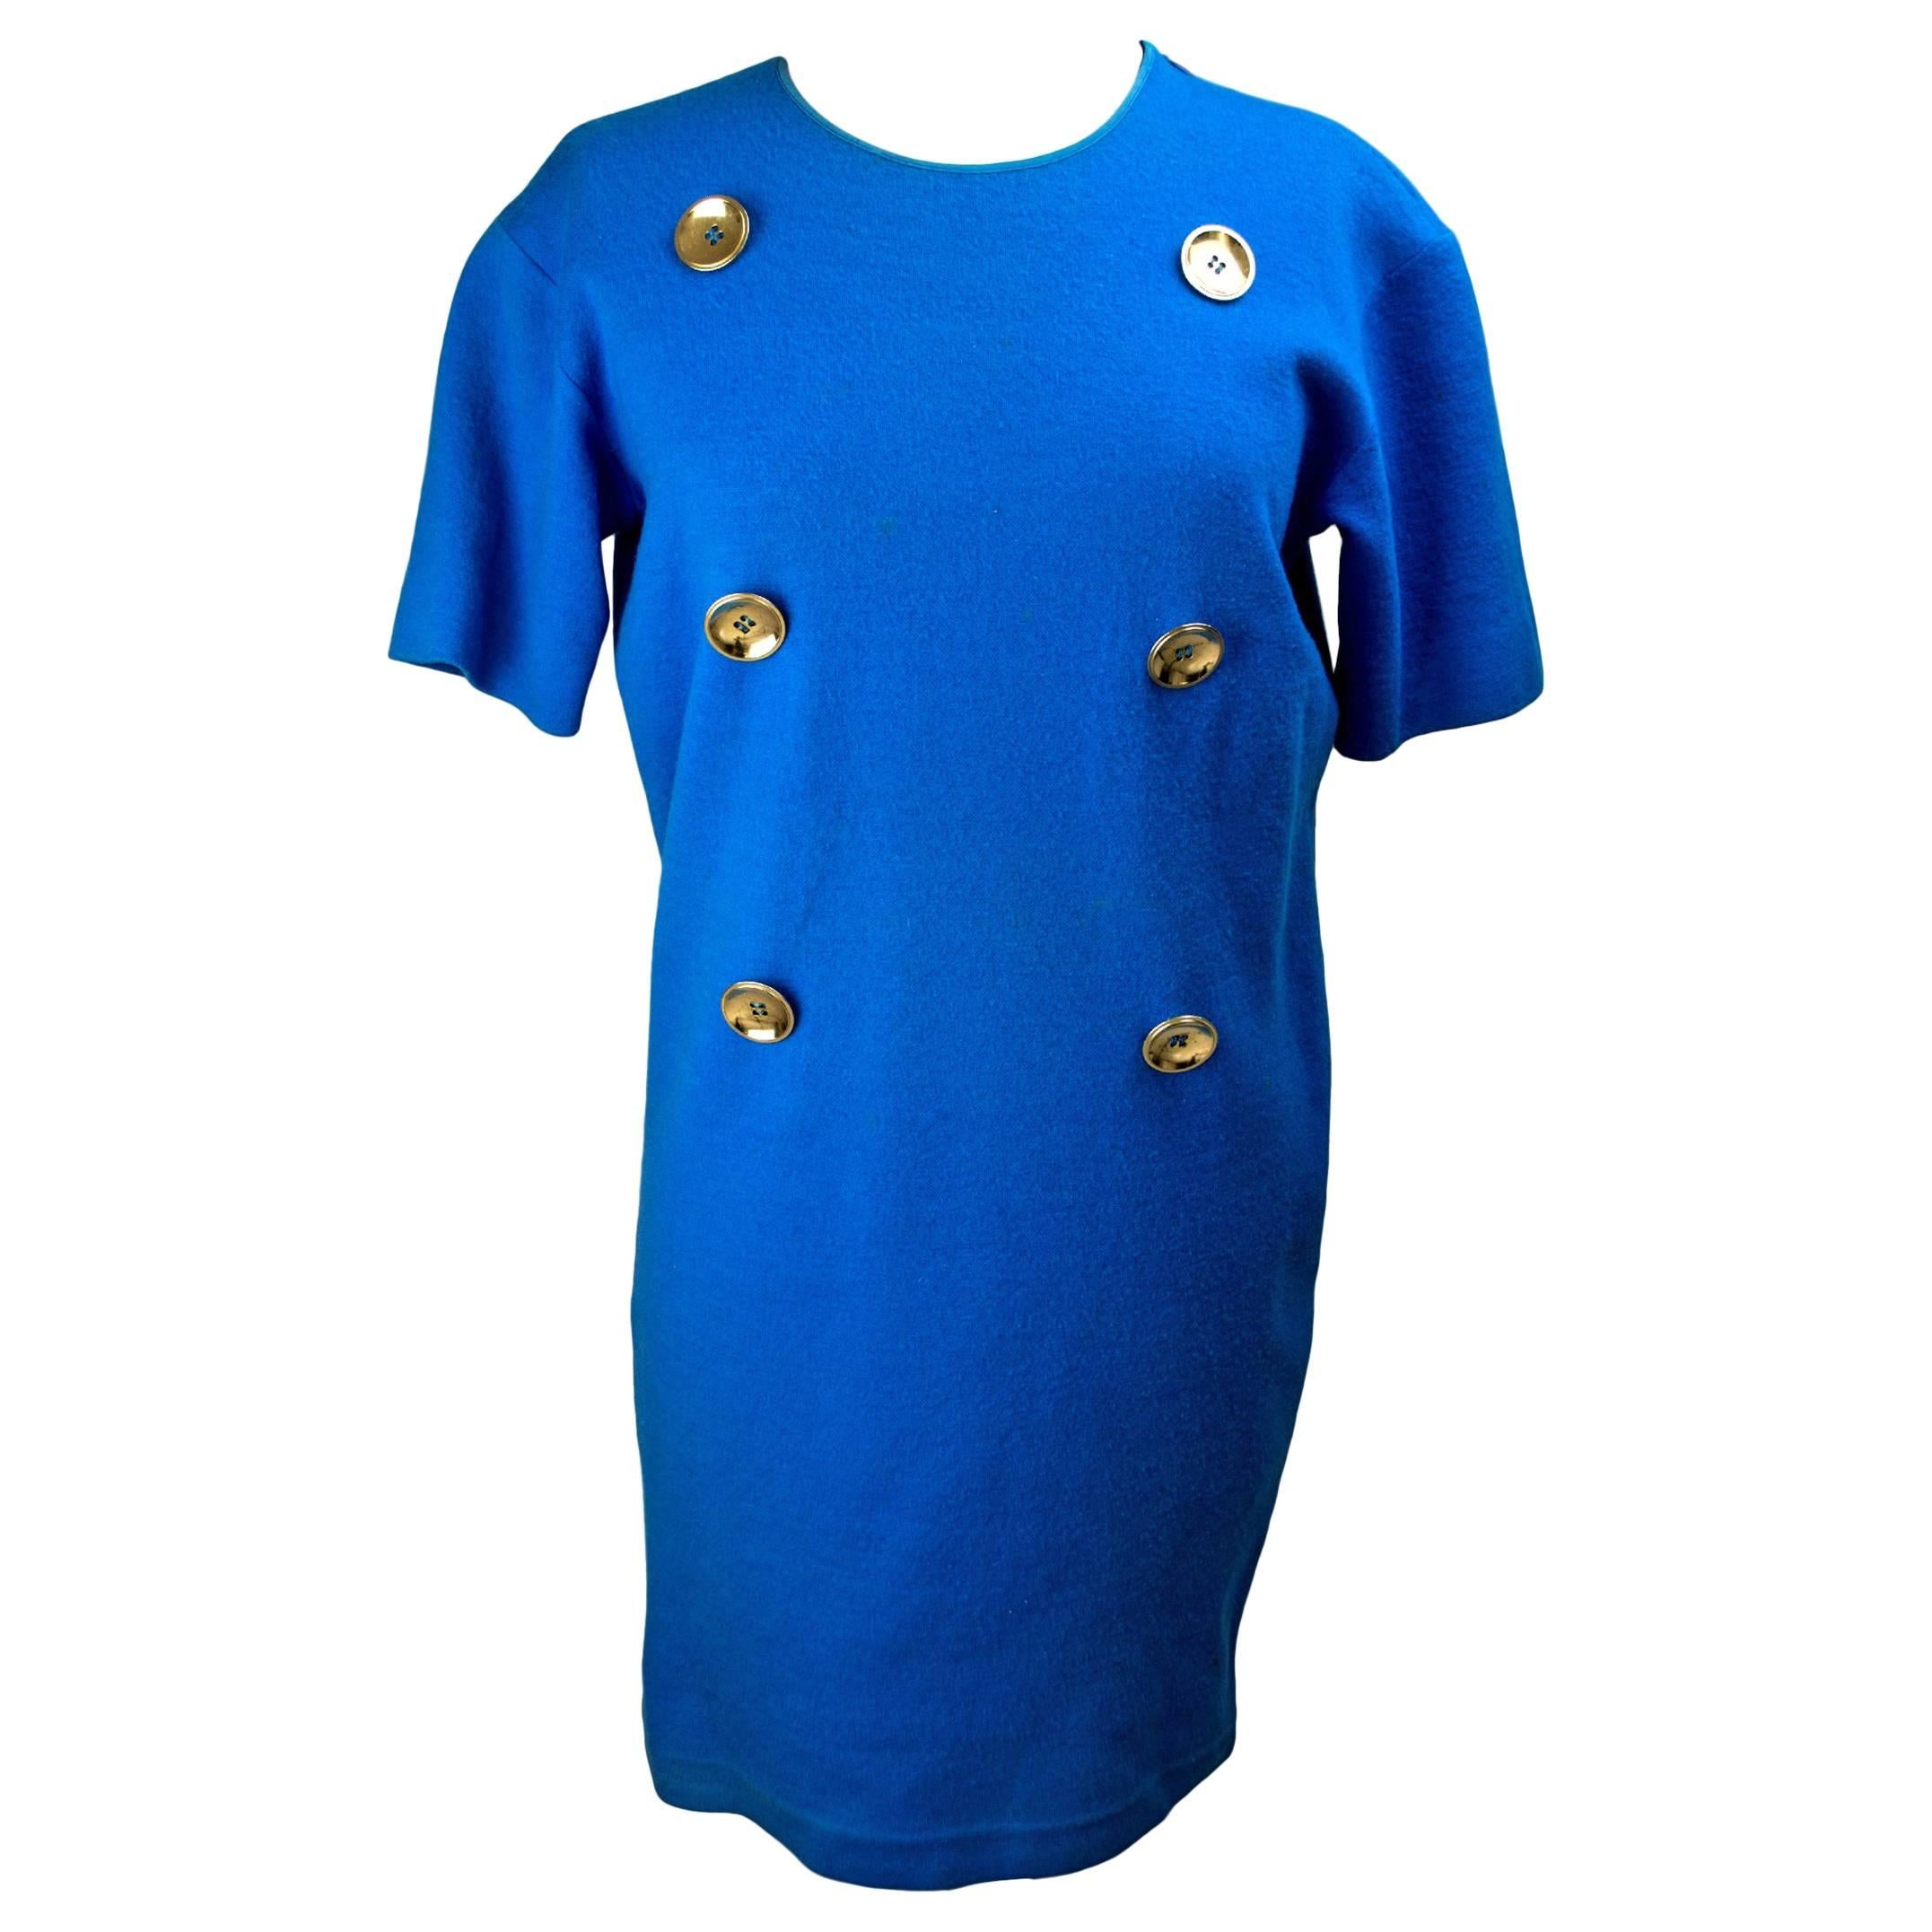 Gianfranco Ferrè 1970s blue tunic dress women's size 44 100% wool